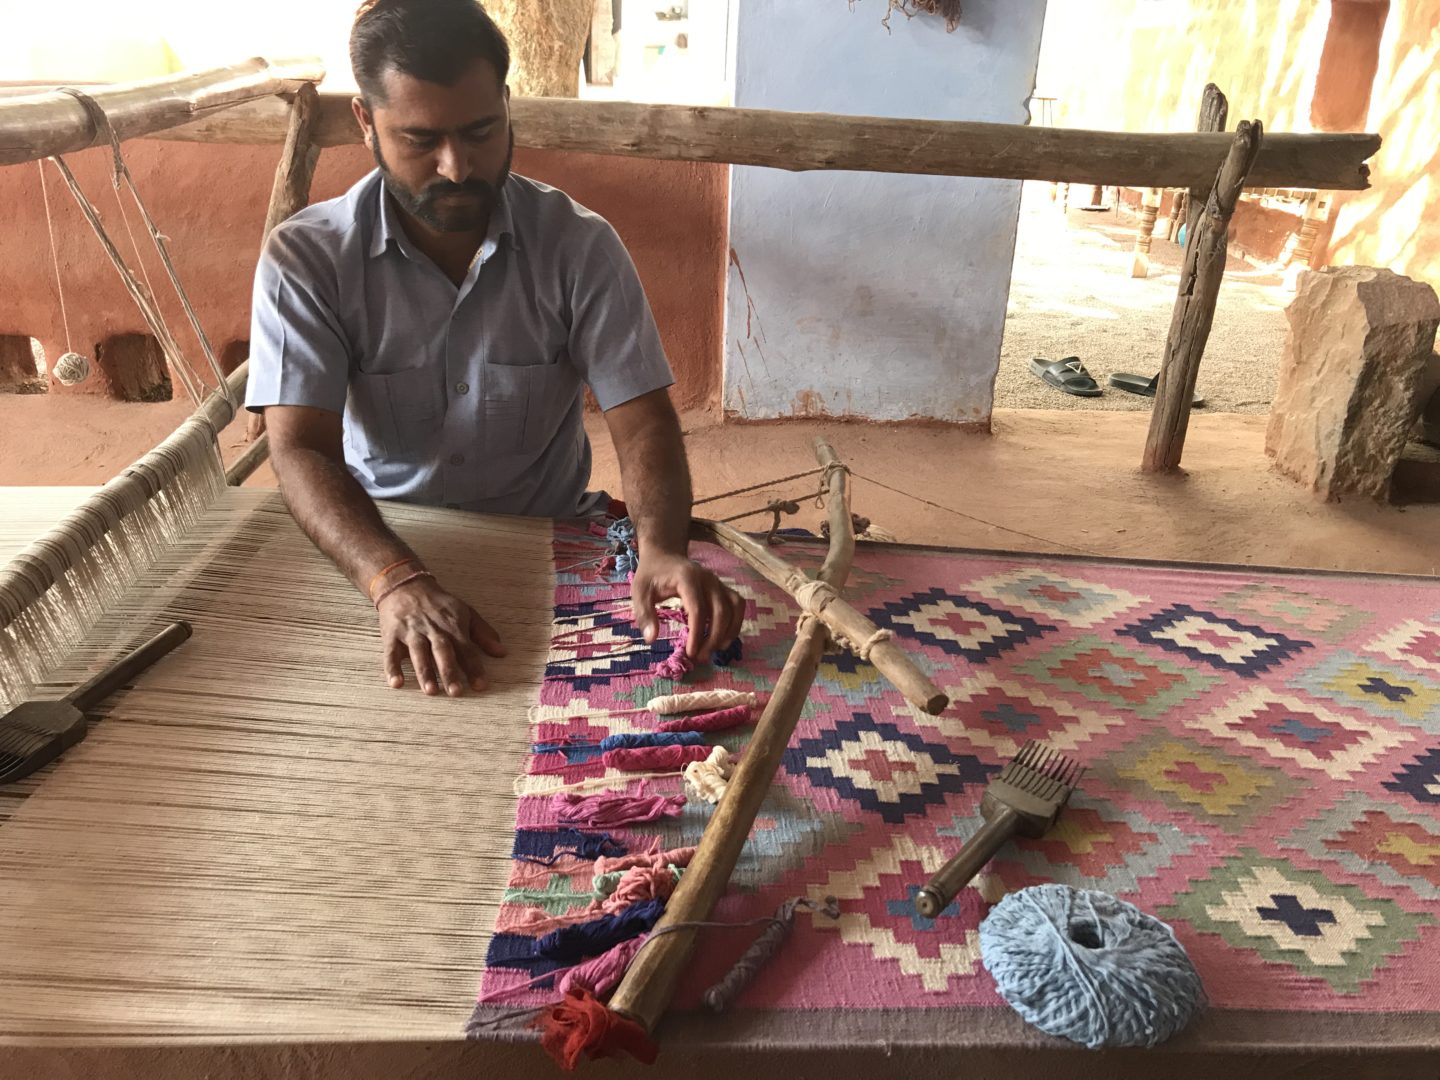 rajasthani handicrafts